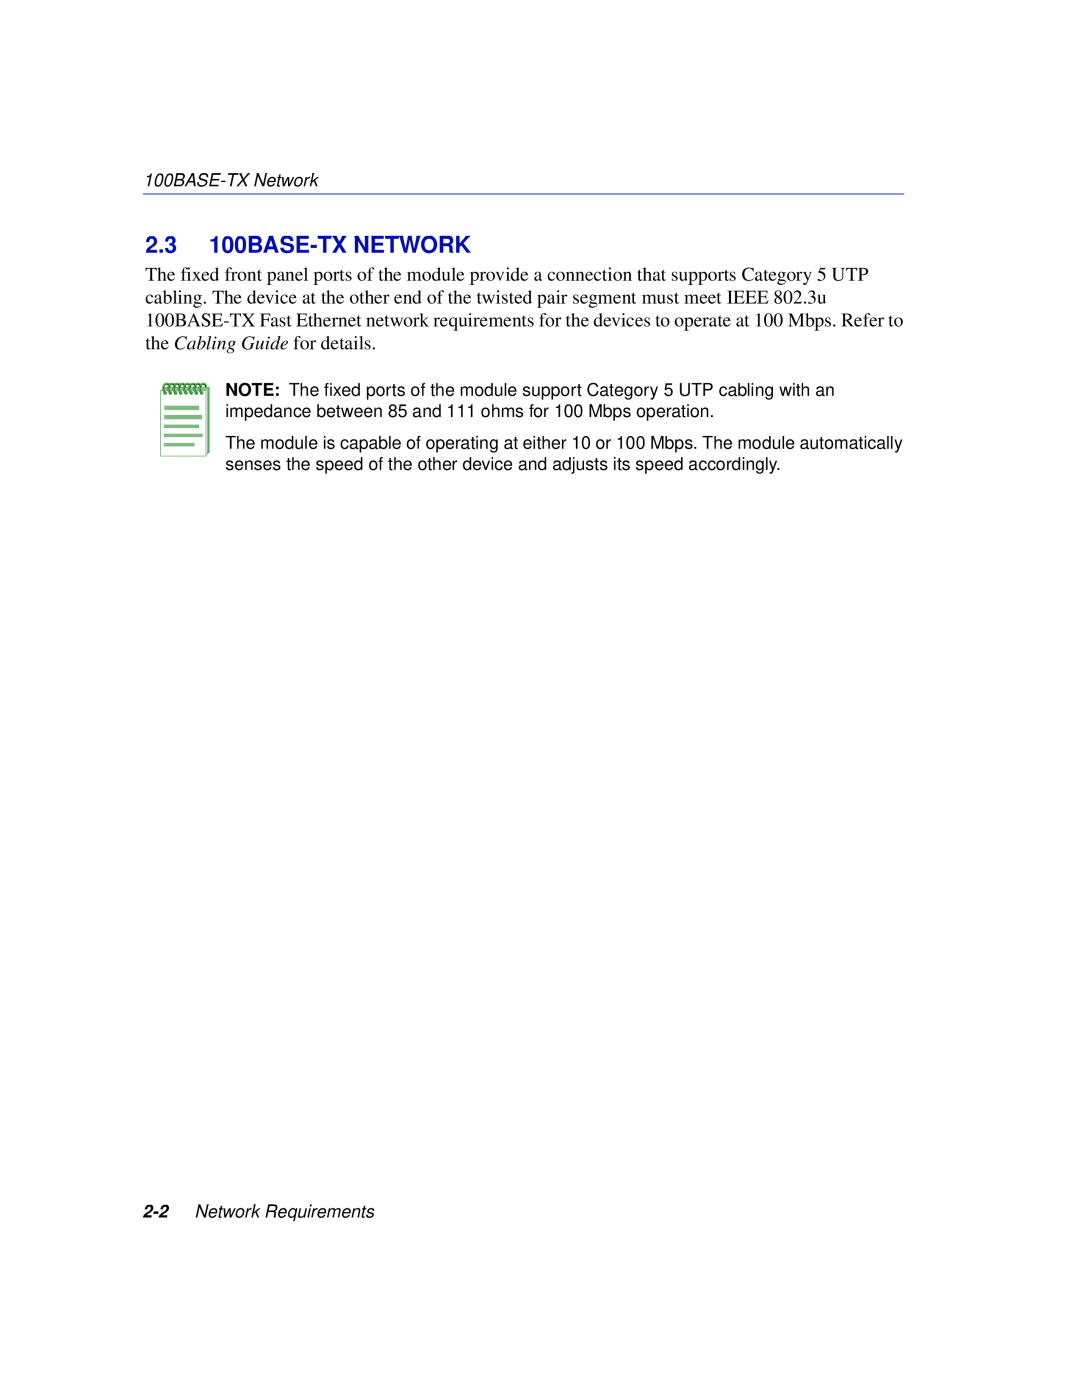 Enterasys Networks 6H302-48 manual 2.3 100BASE-TX NETWORK, 100BASE-TX Network, Network Requirements 